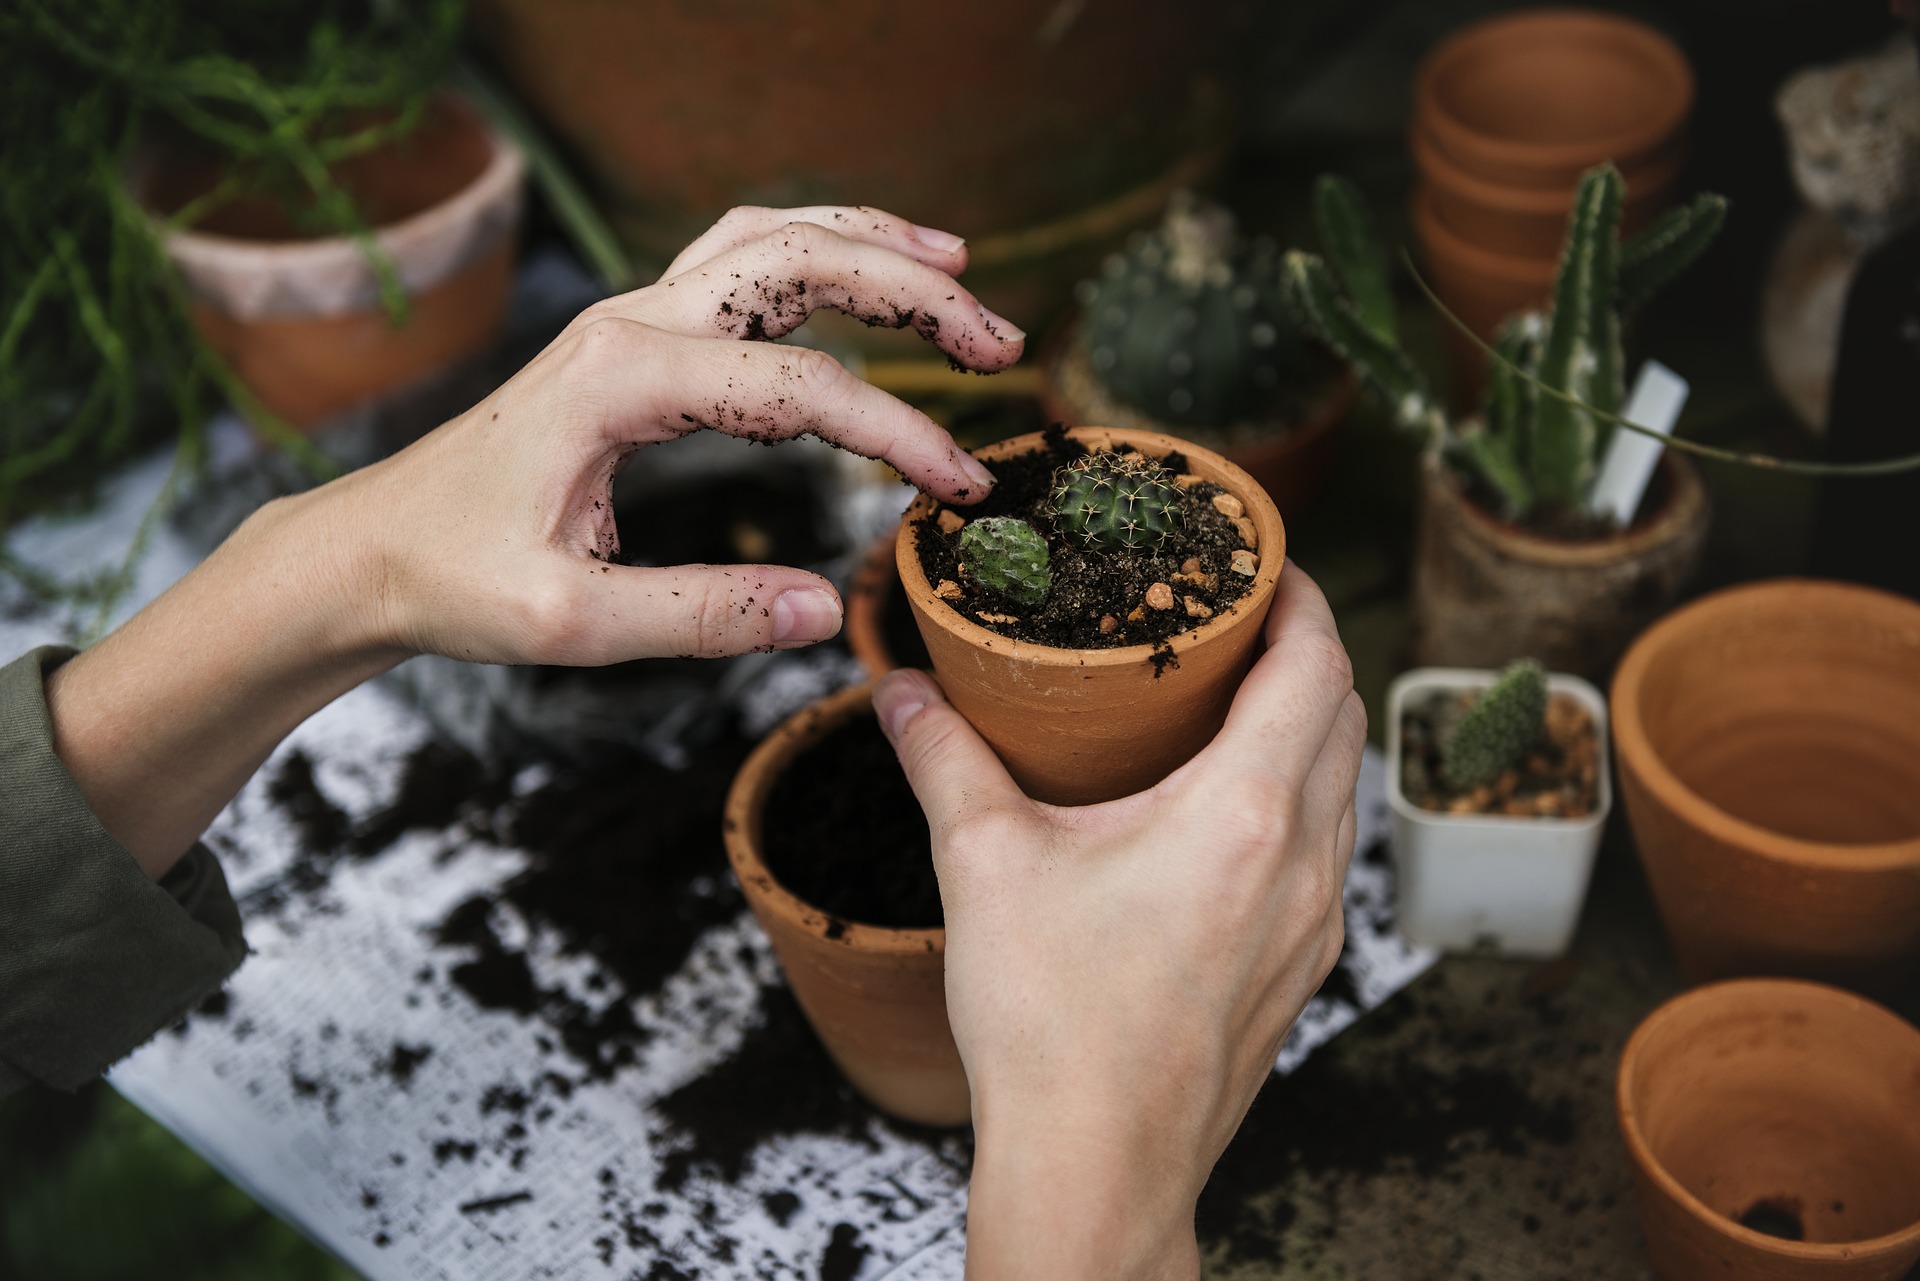 Hands planting a plant